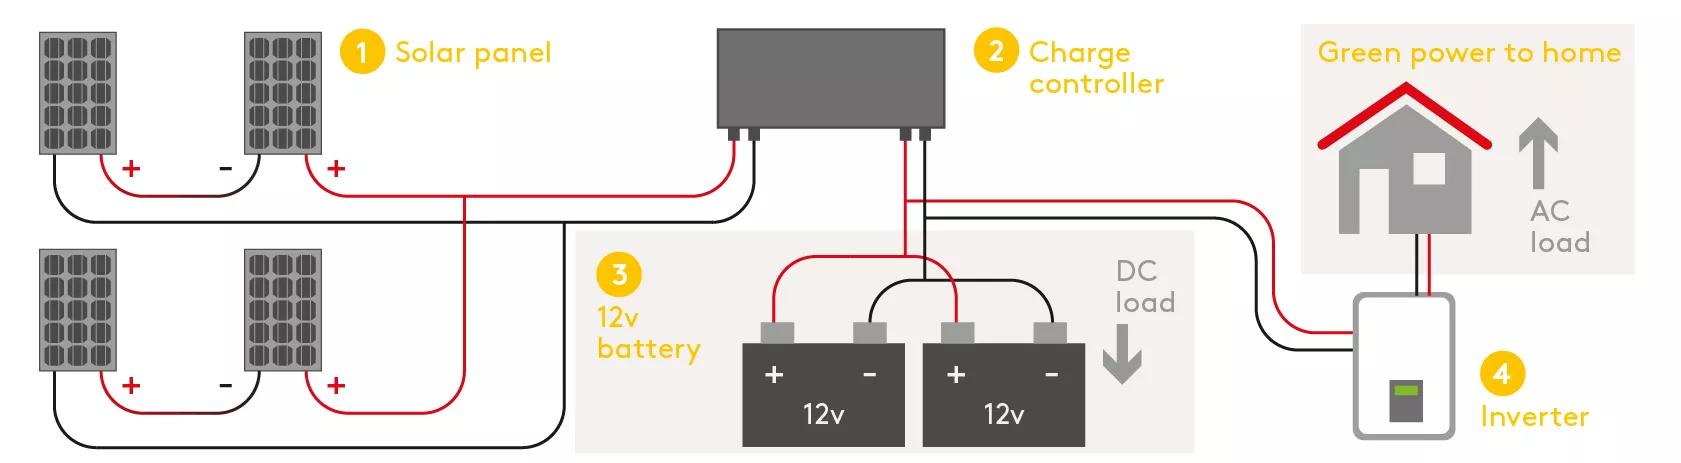 6554_Essentra_SolarPV Diagrams 1_1 (JH)_Basic solar wiring diagram.jpg